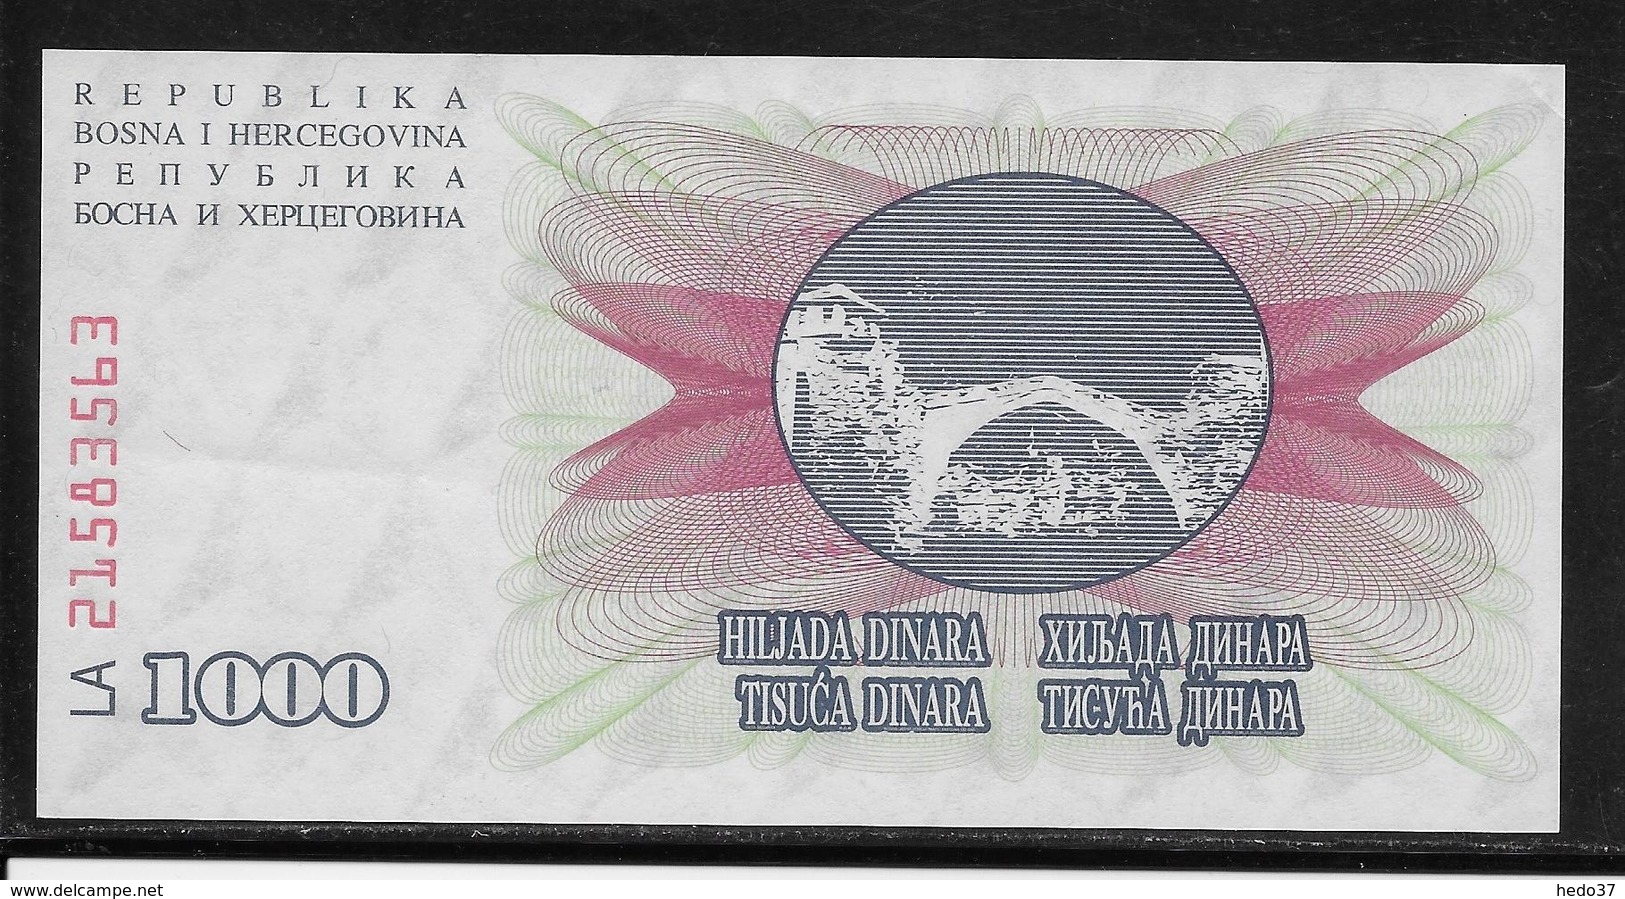 Bosnie-Herzegovine - 1000 Dinara - Pick N° 15 - NEUF - Bosnia Erzegovina